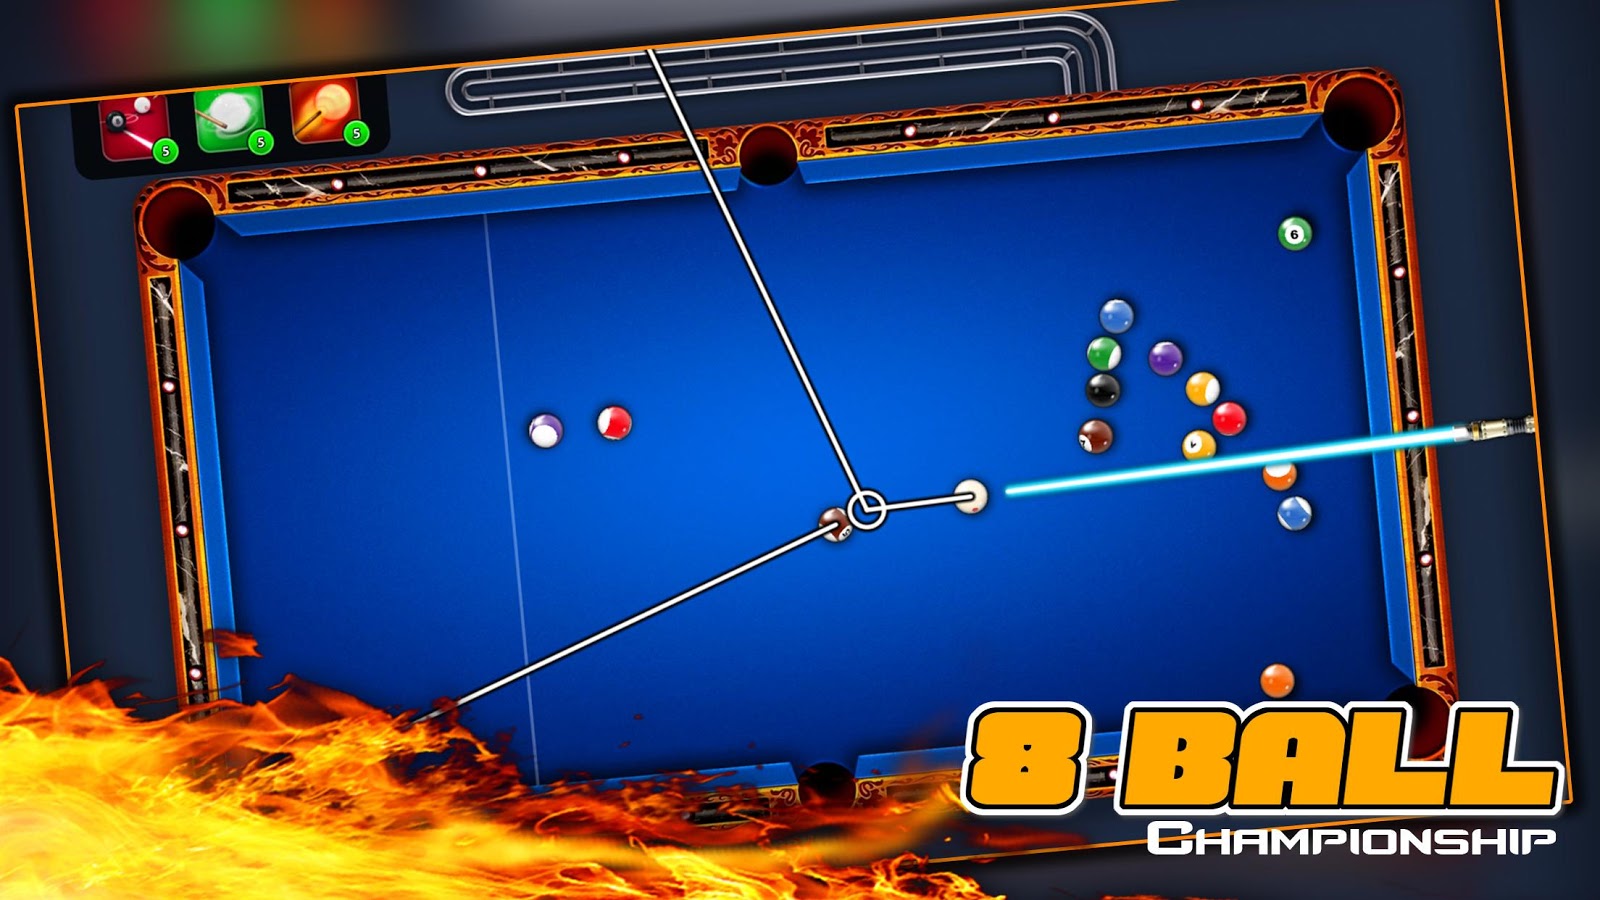 8 Ball Magic Pool Championship 1.0 APK Download - Android ... - 